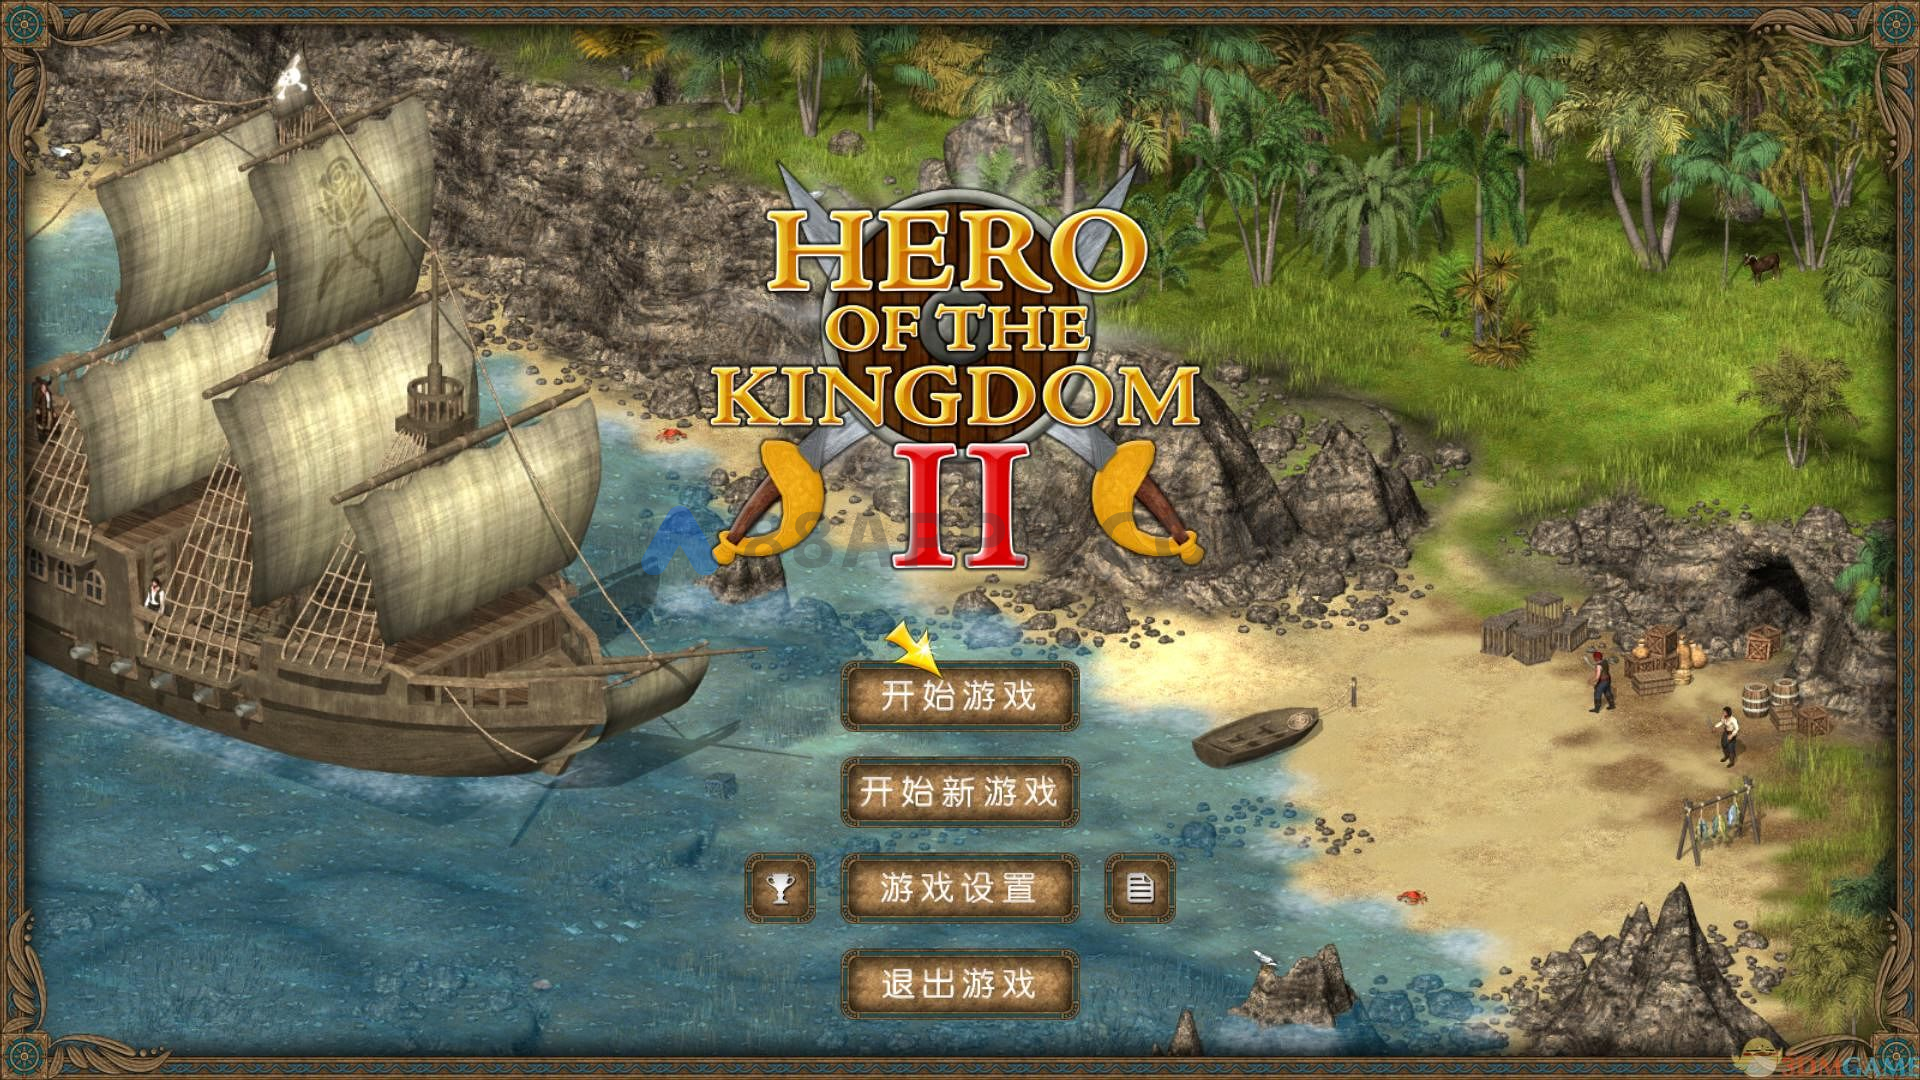 王国英雄2 hero of the kingdom 2 for Mac v1.3.9 中文版 模拟经营类游戏插图1